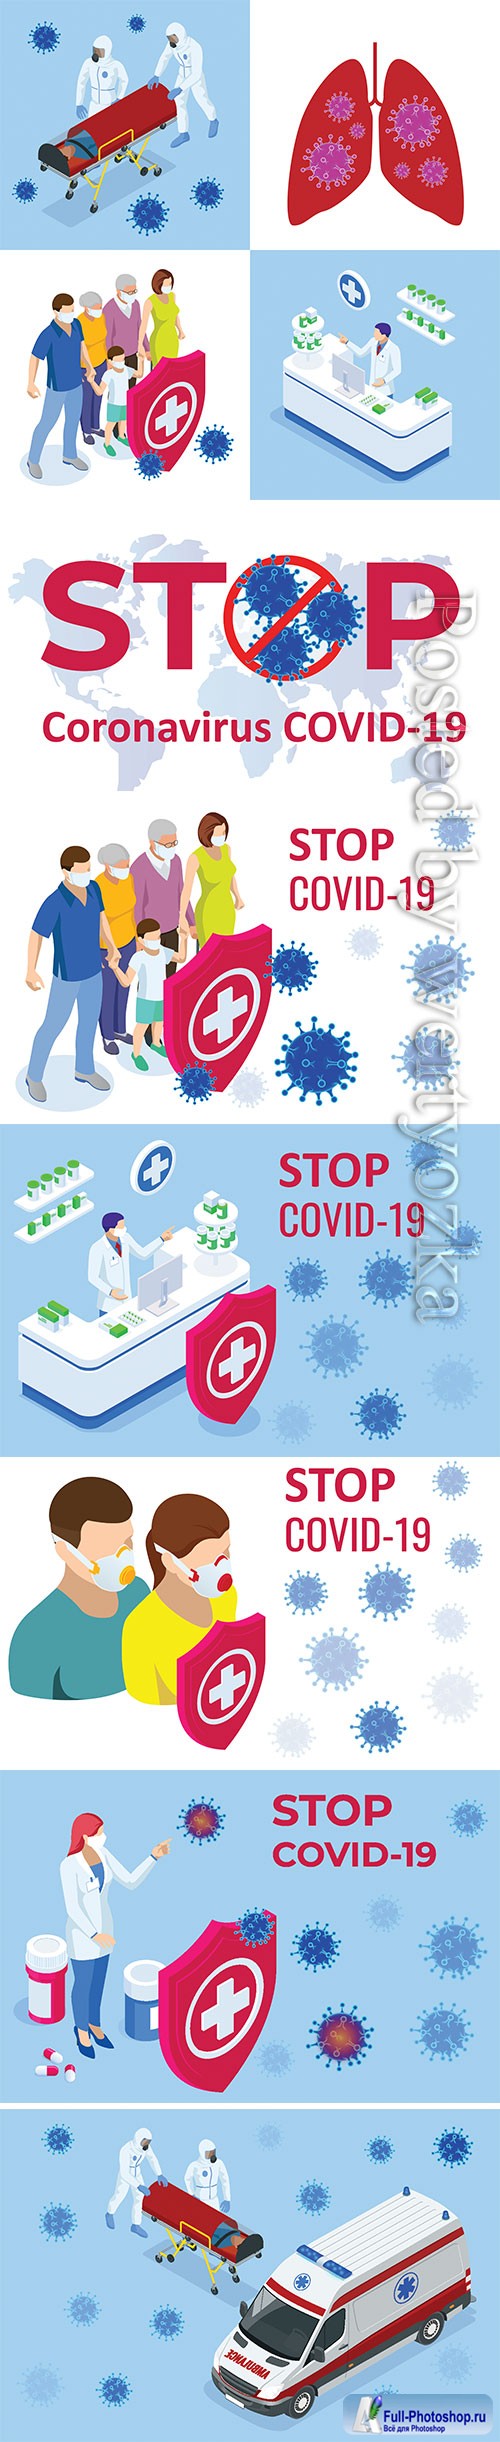 Pandemic coronavirus COVID-19